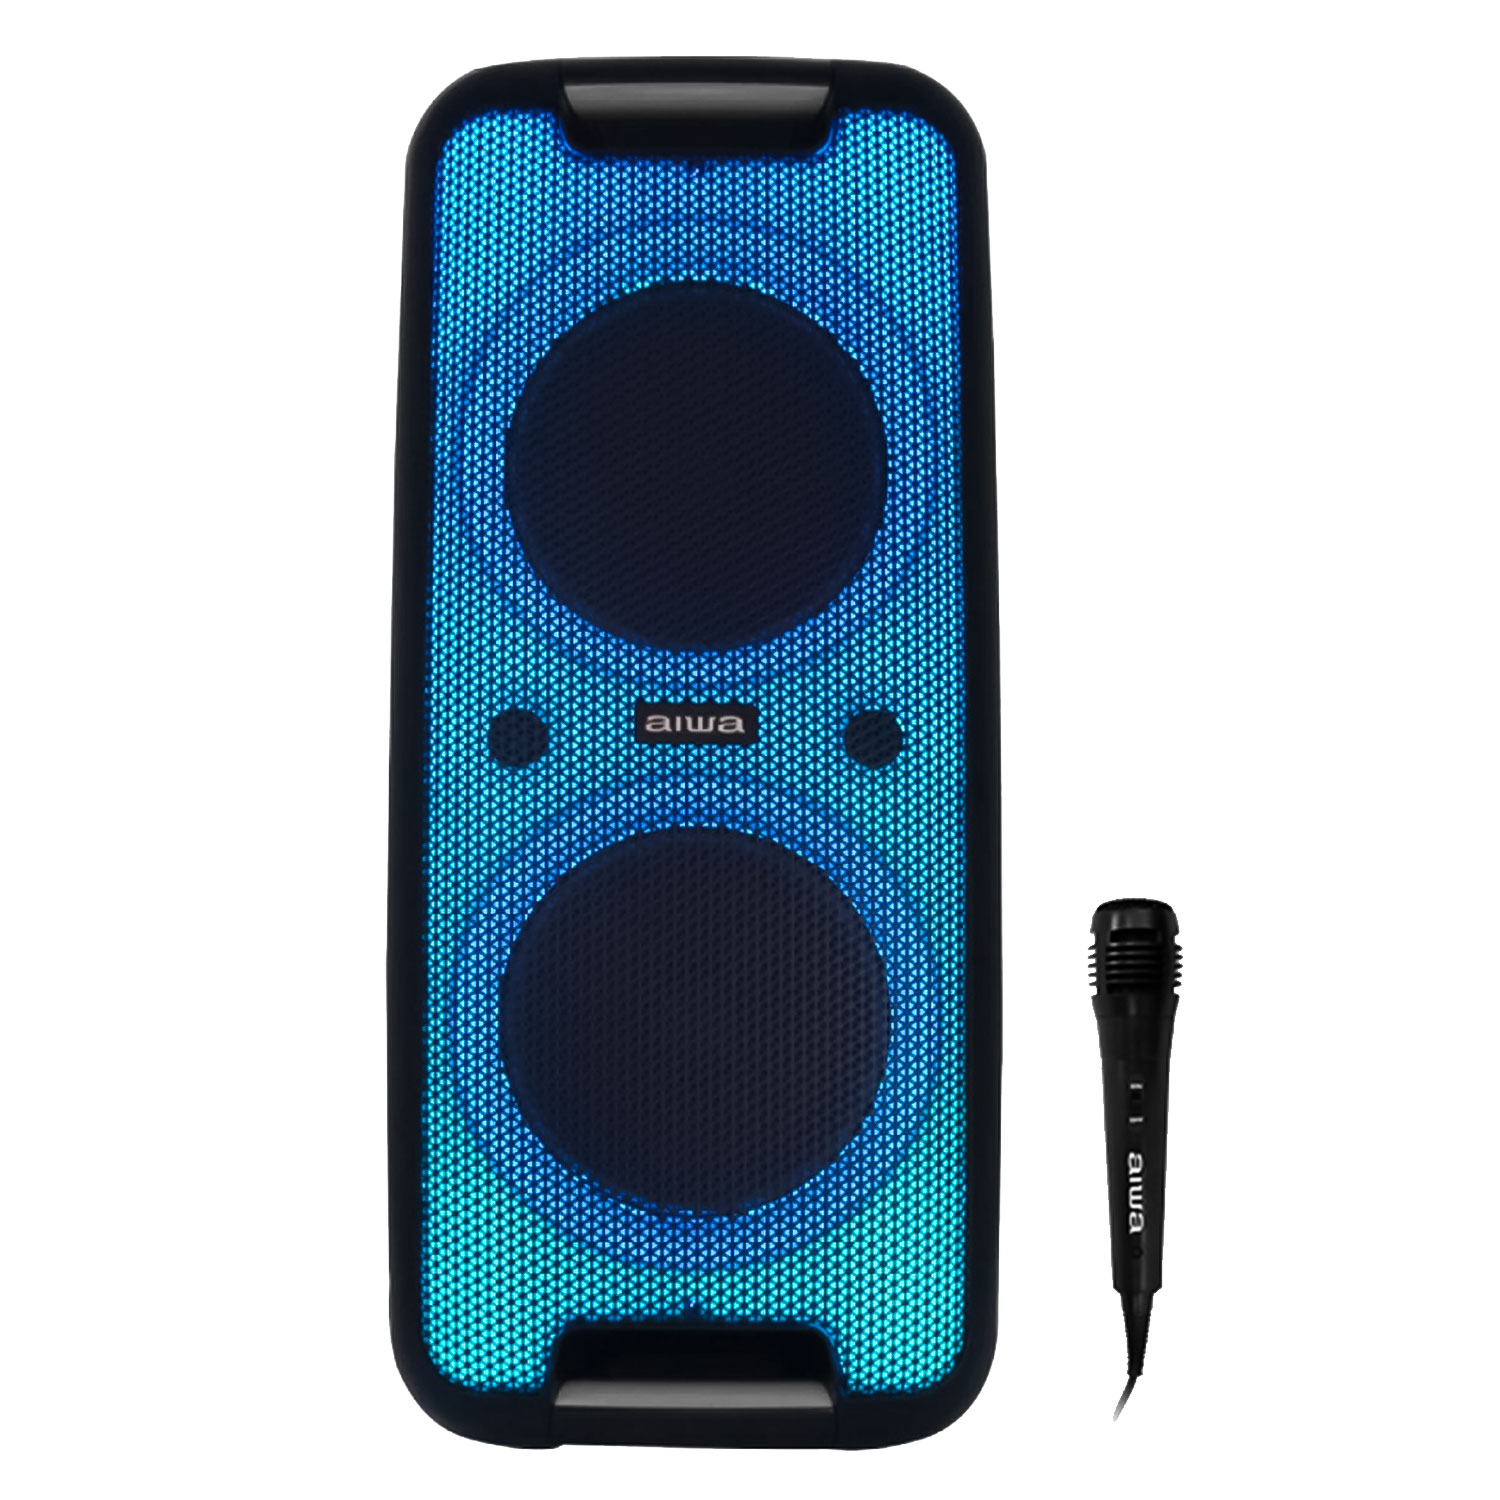 Caixa de Som Karaokê Aiwa AW-POK3LD Bluetooth 1000W + Microfone - Preto
